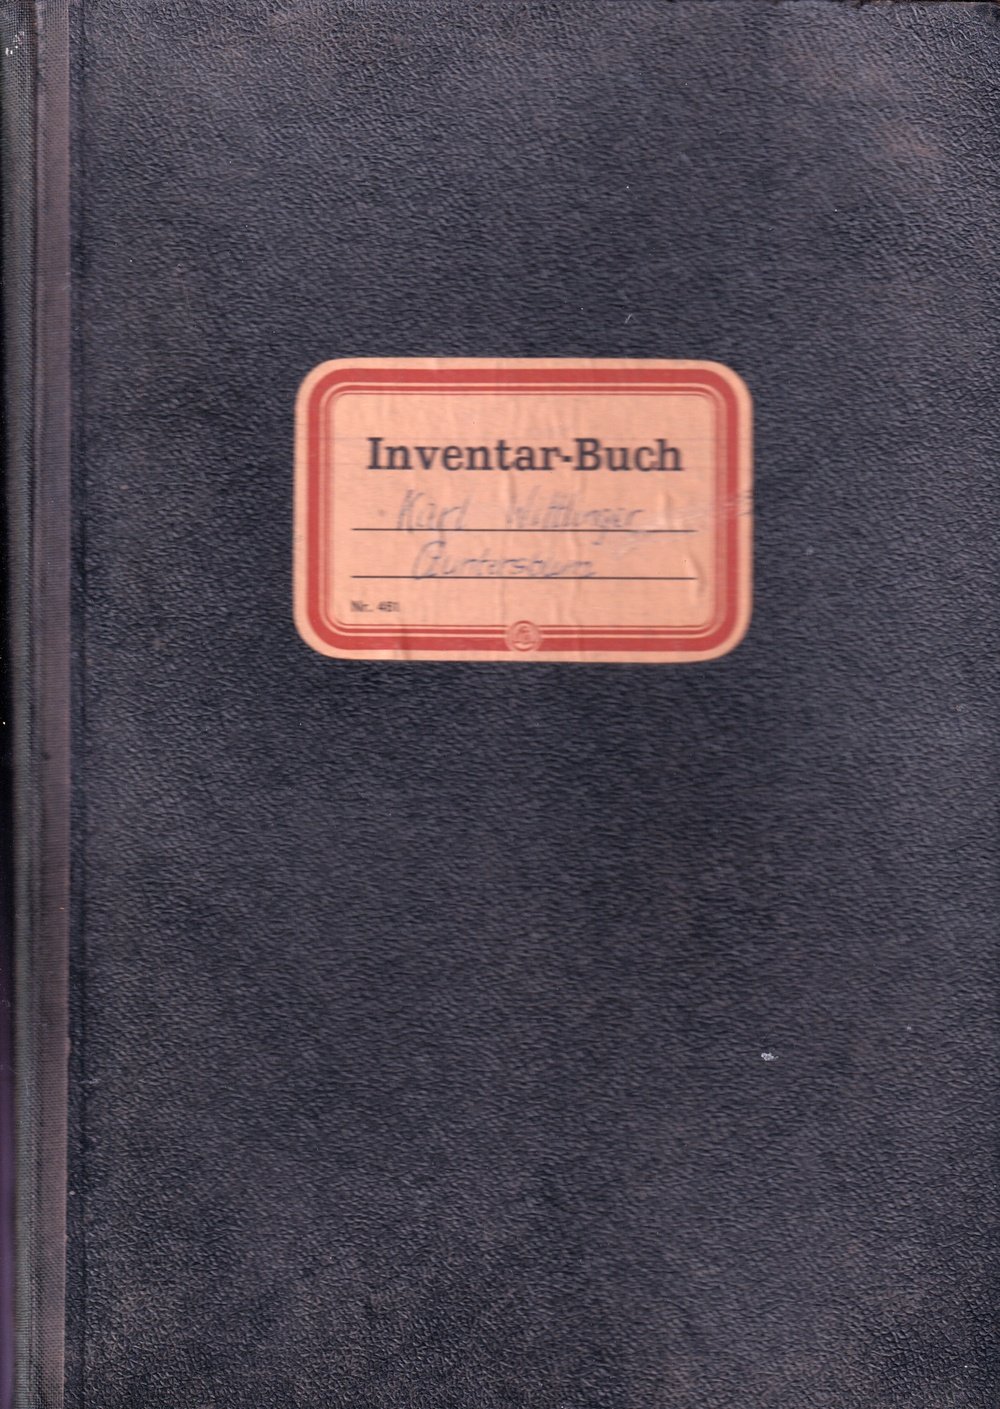 Inventar-Buch Karl Wittlinger Guntersblum (Kulturverein Guntersblum CC BY-NC-SA)